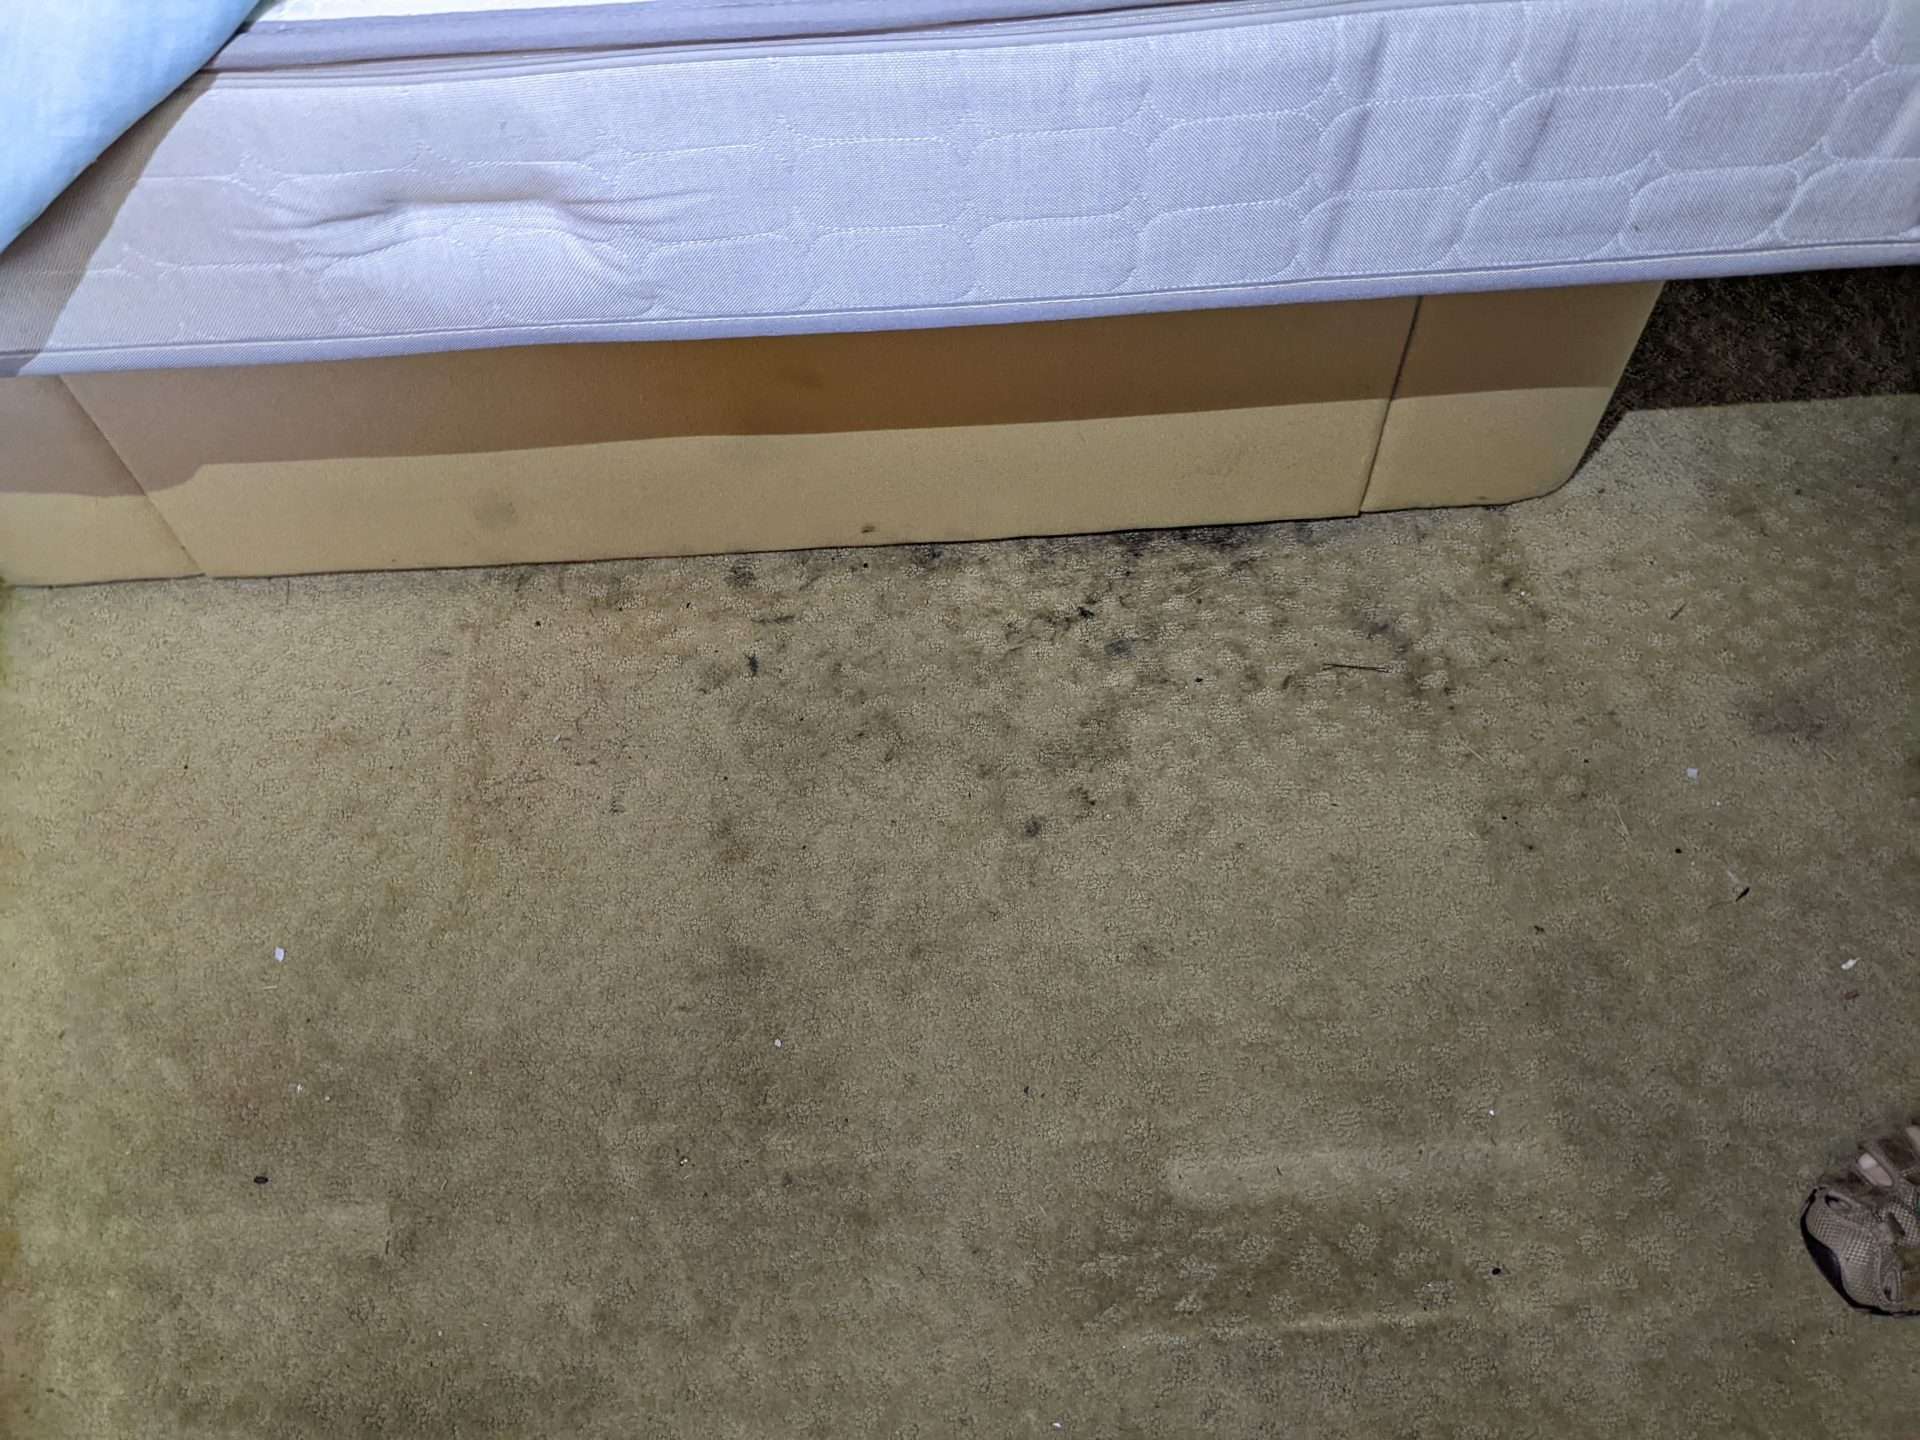 Mold on carpet in RV